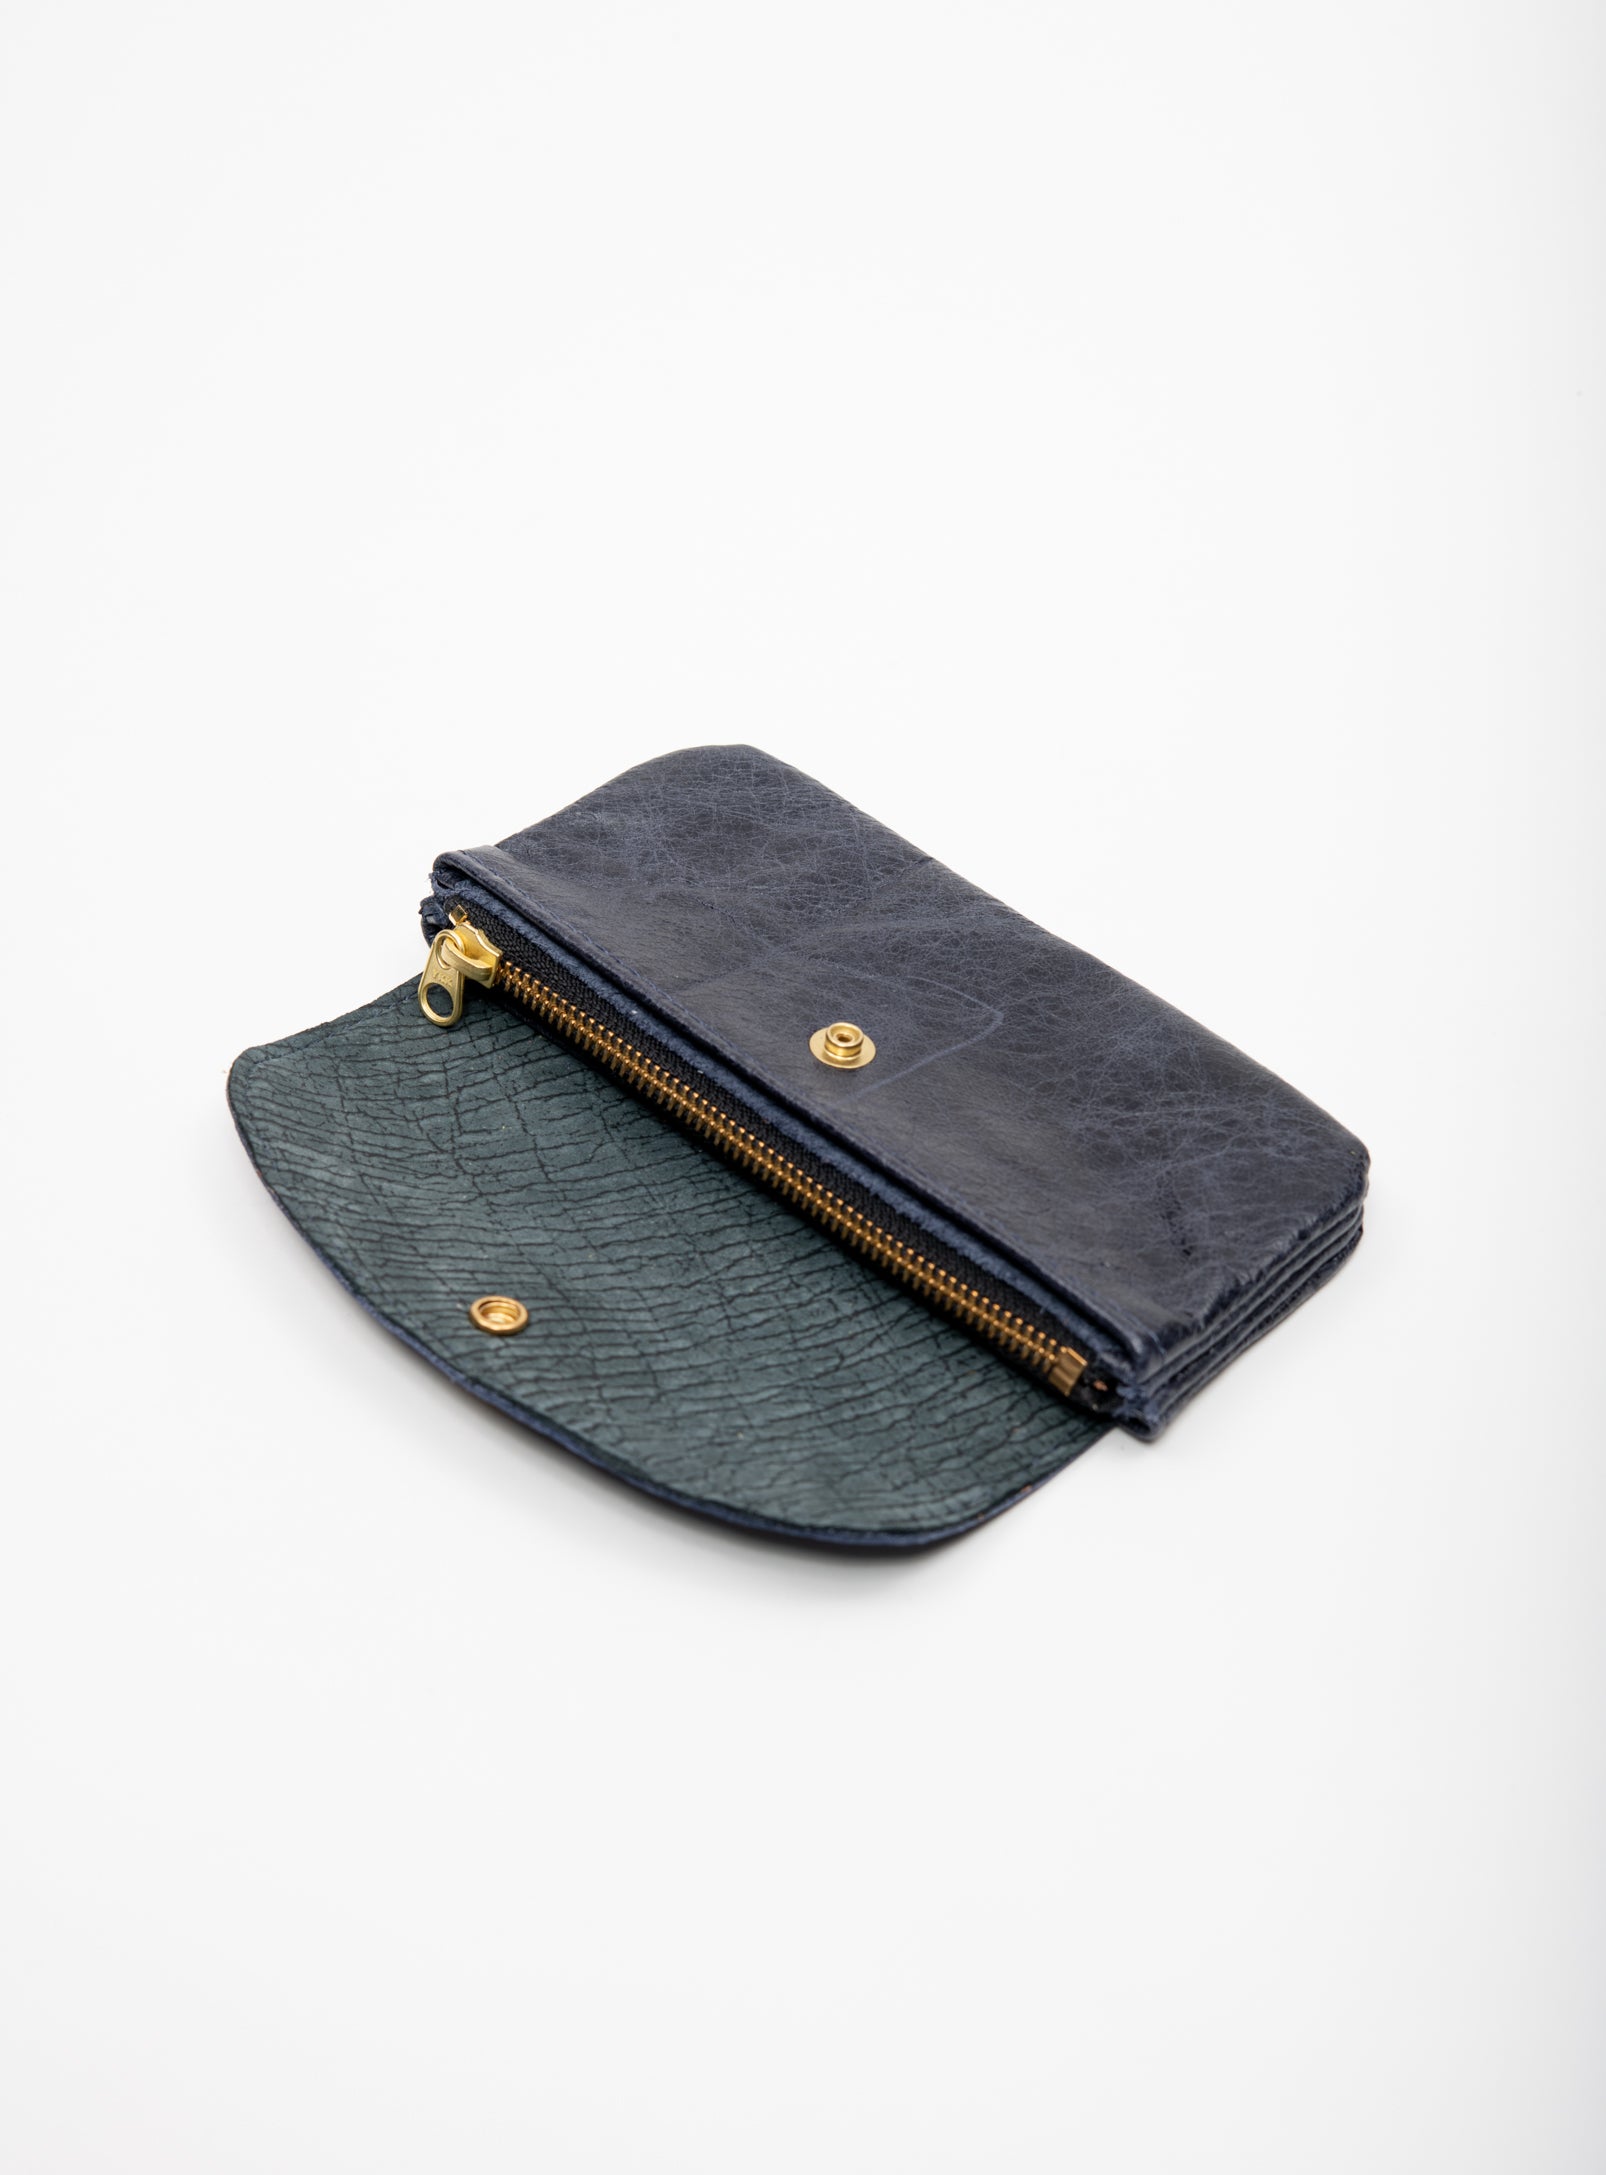 Minimalist leather wallet MARQUETTE model